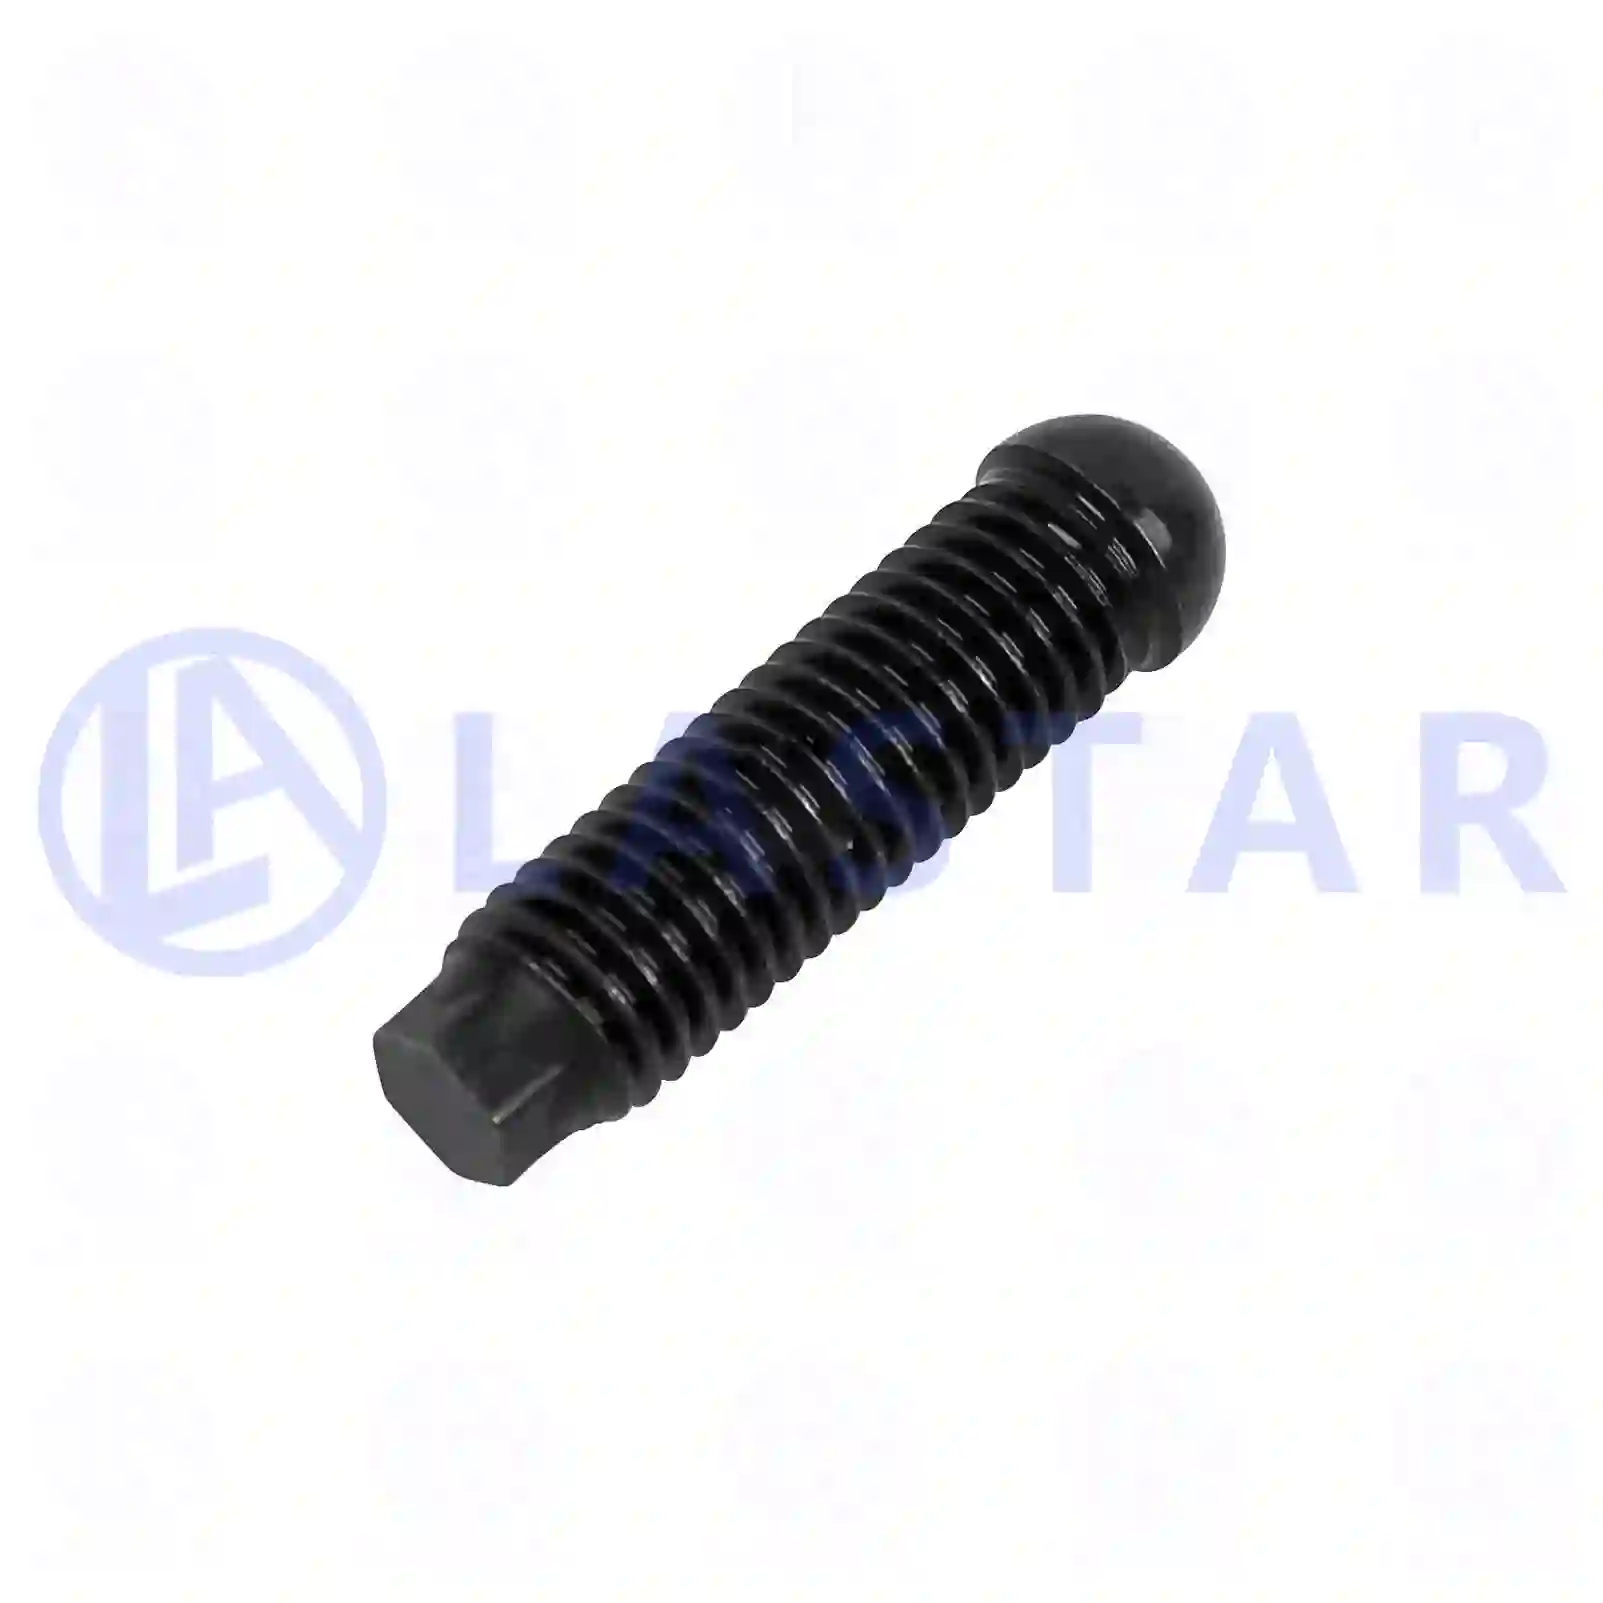  Adjusting screw || Lastar Spare Part | Truck Spare Parts, Auotomotive Spare Parts